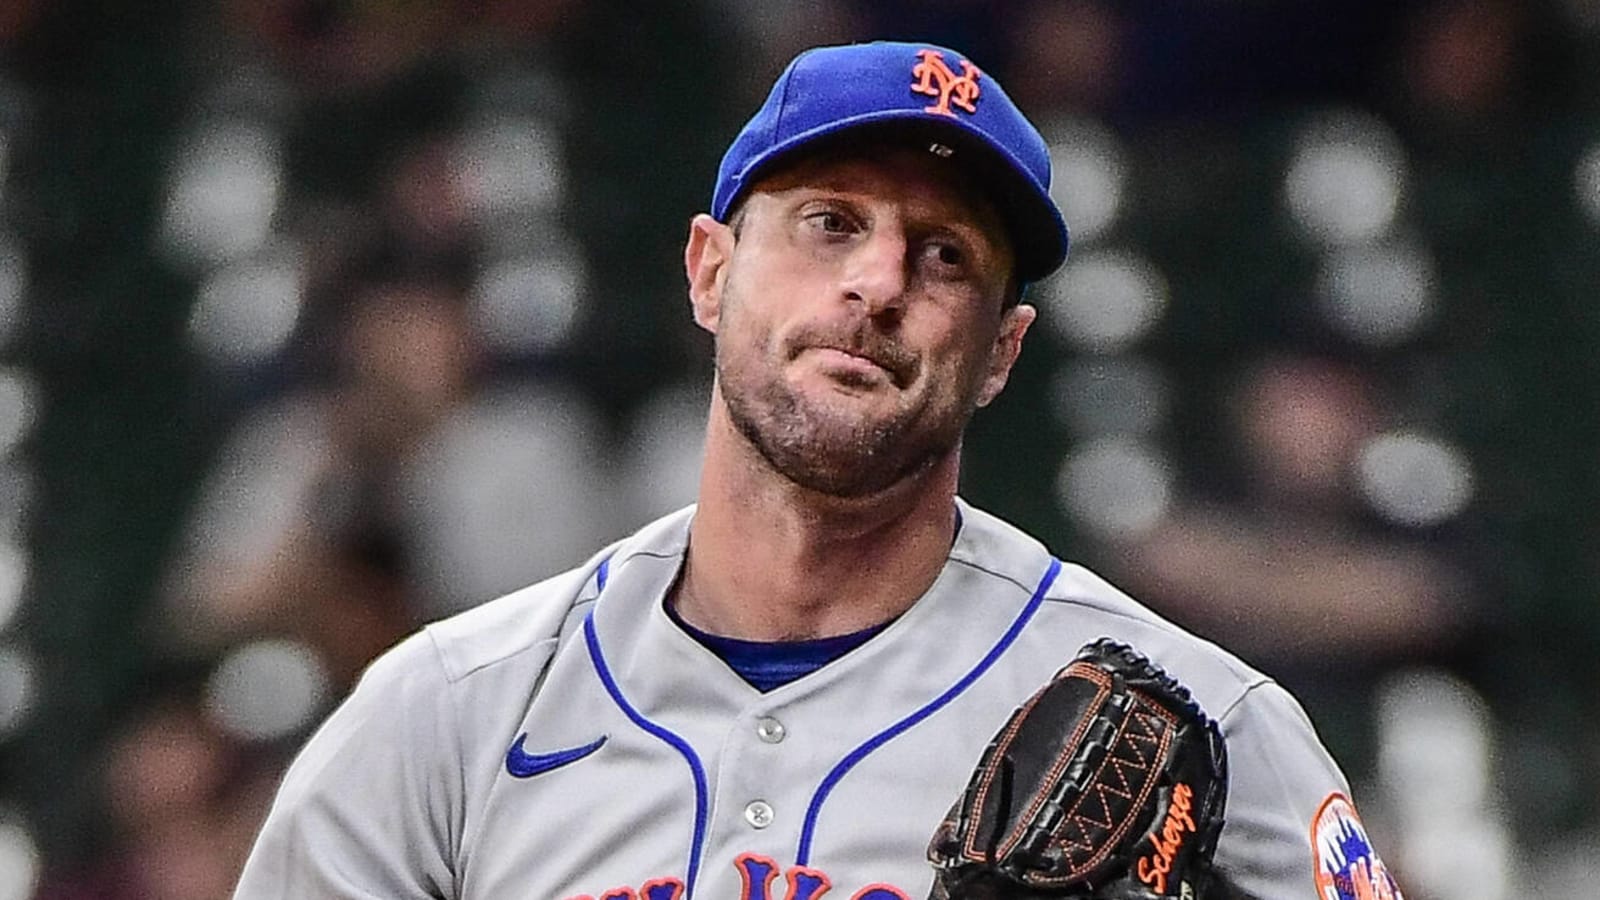 NY Mets: Max Scherzer and Justin Verlander set to return to rotation